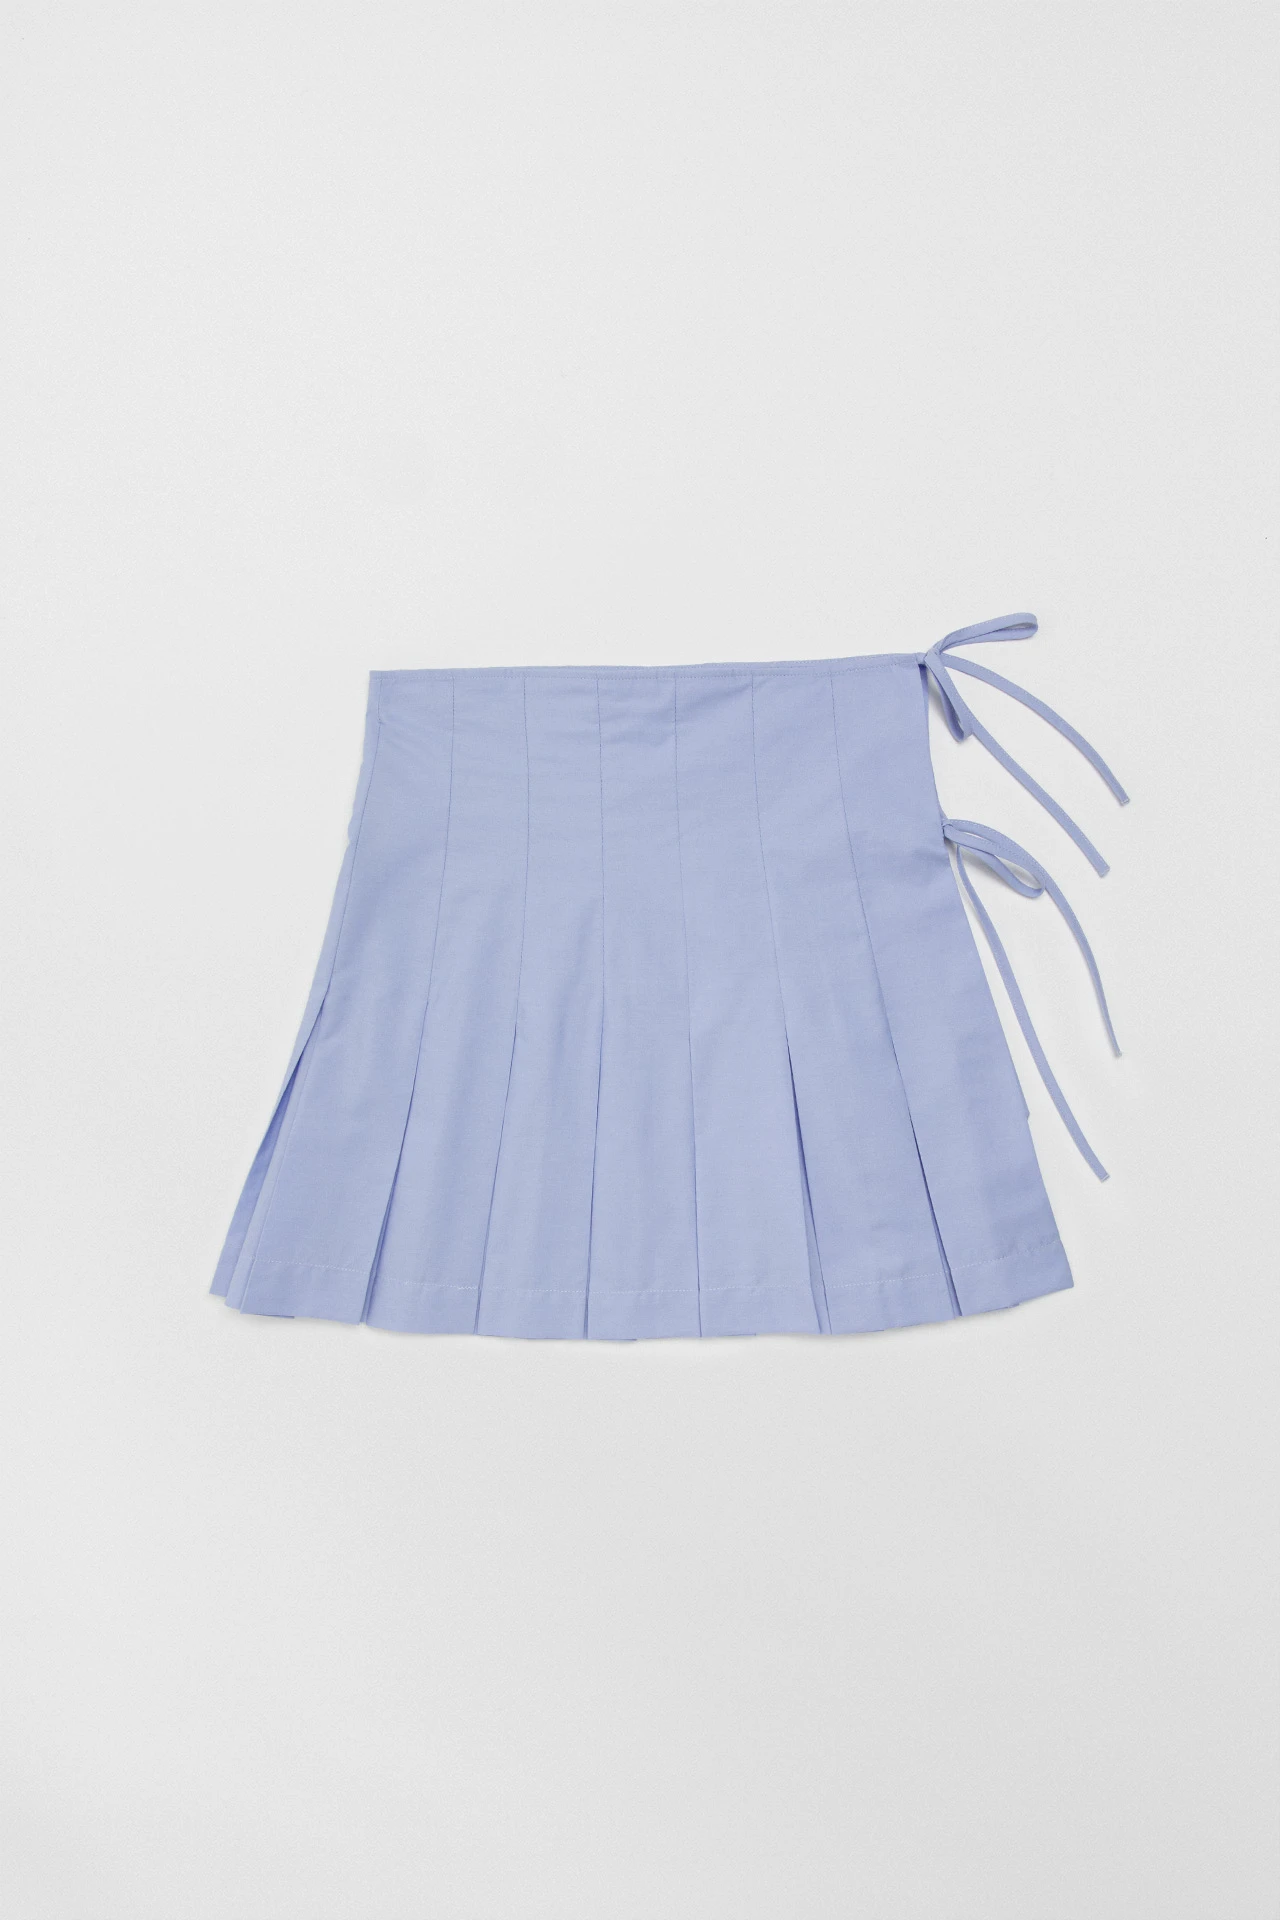 Miista-richelle-blue-skirt-01